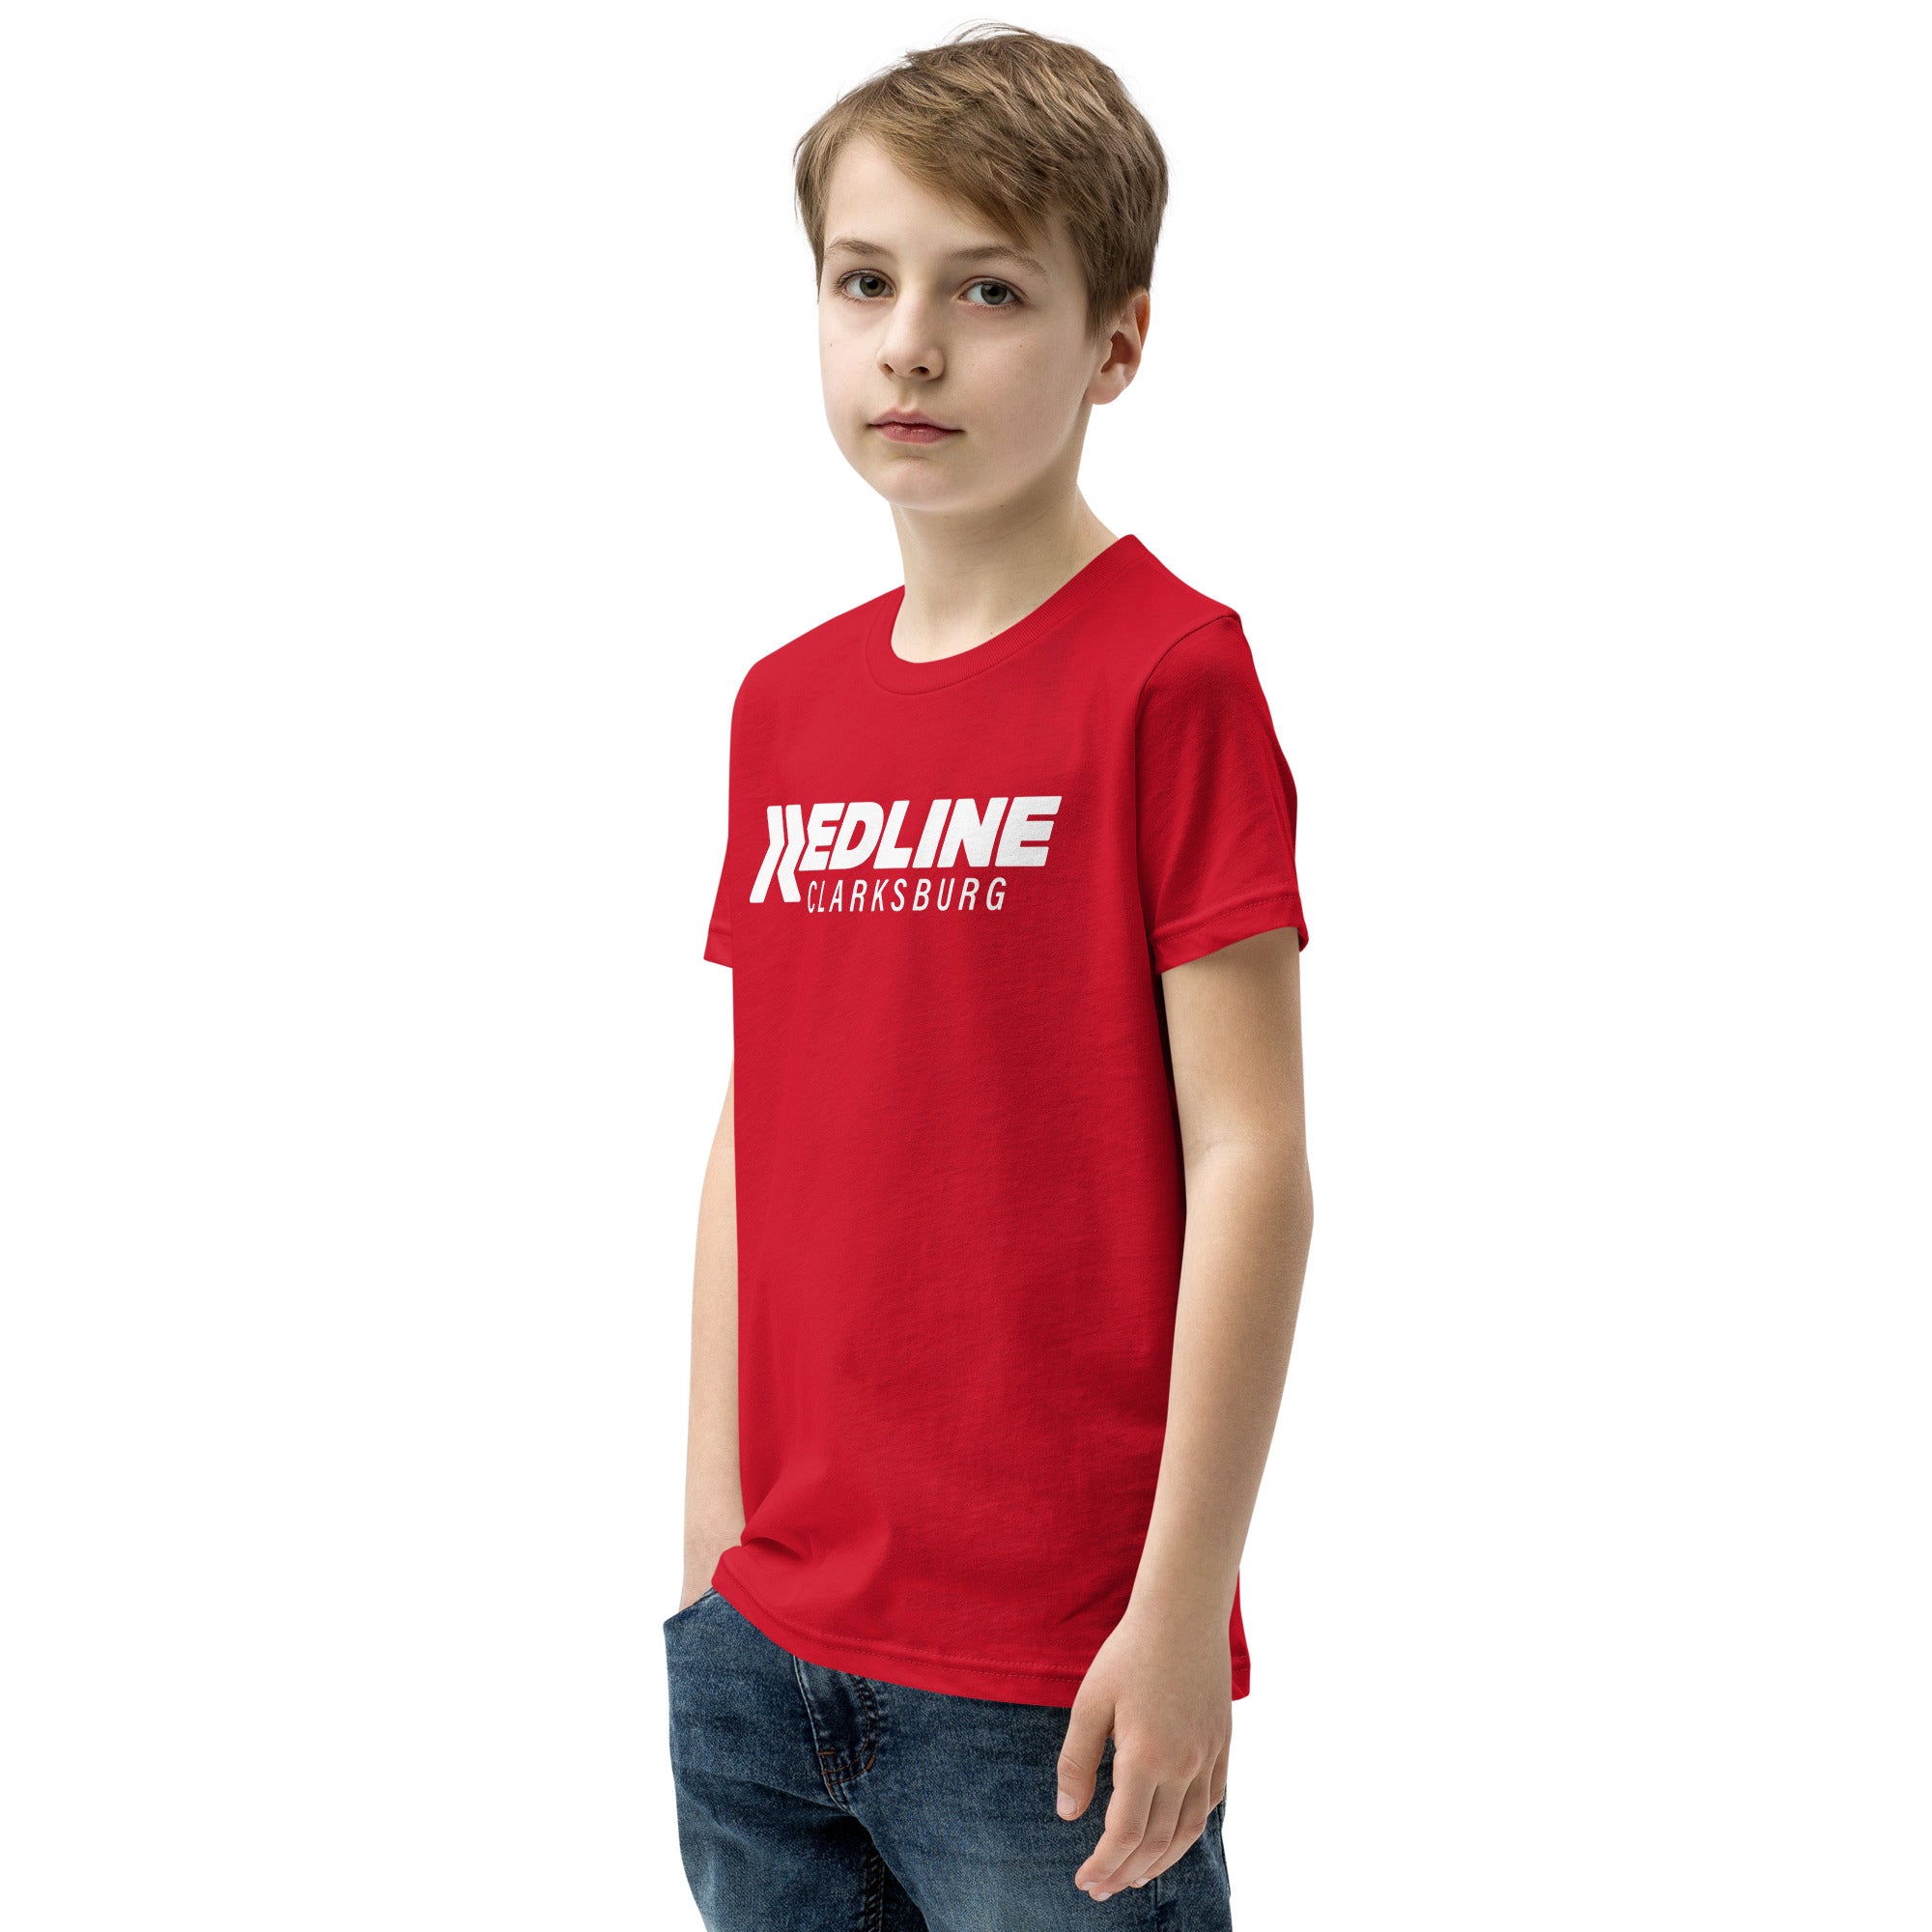 Clarksburg Logo W - Red Youth Short Sleeve T-Shirt